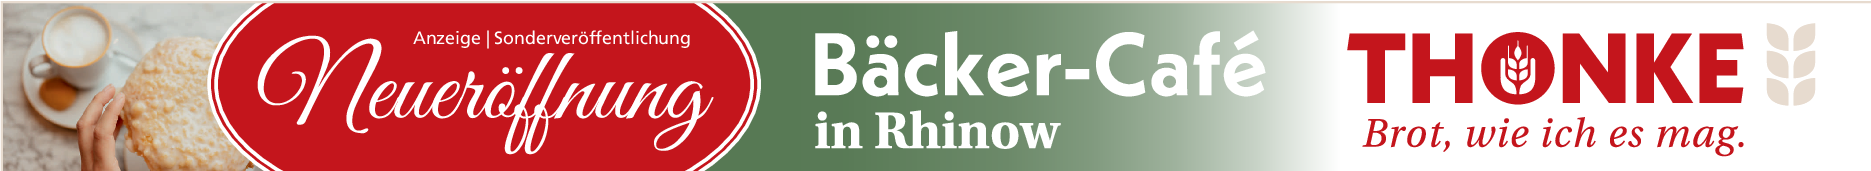 Bäcker-Café: Rhinower Brötchen bei Thonke